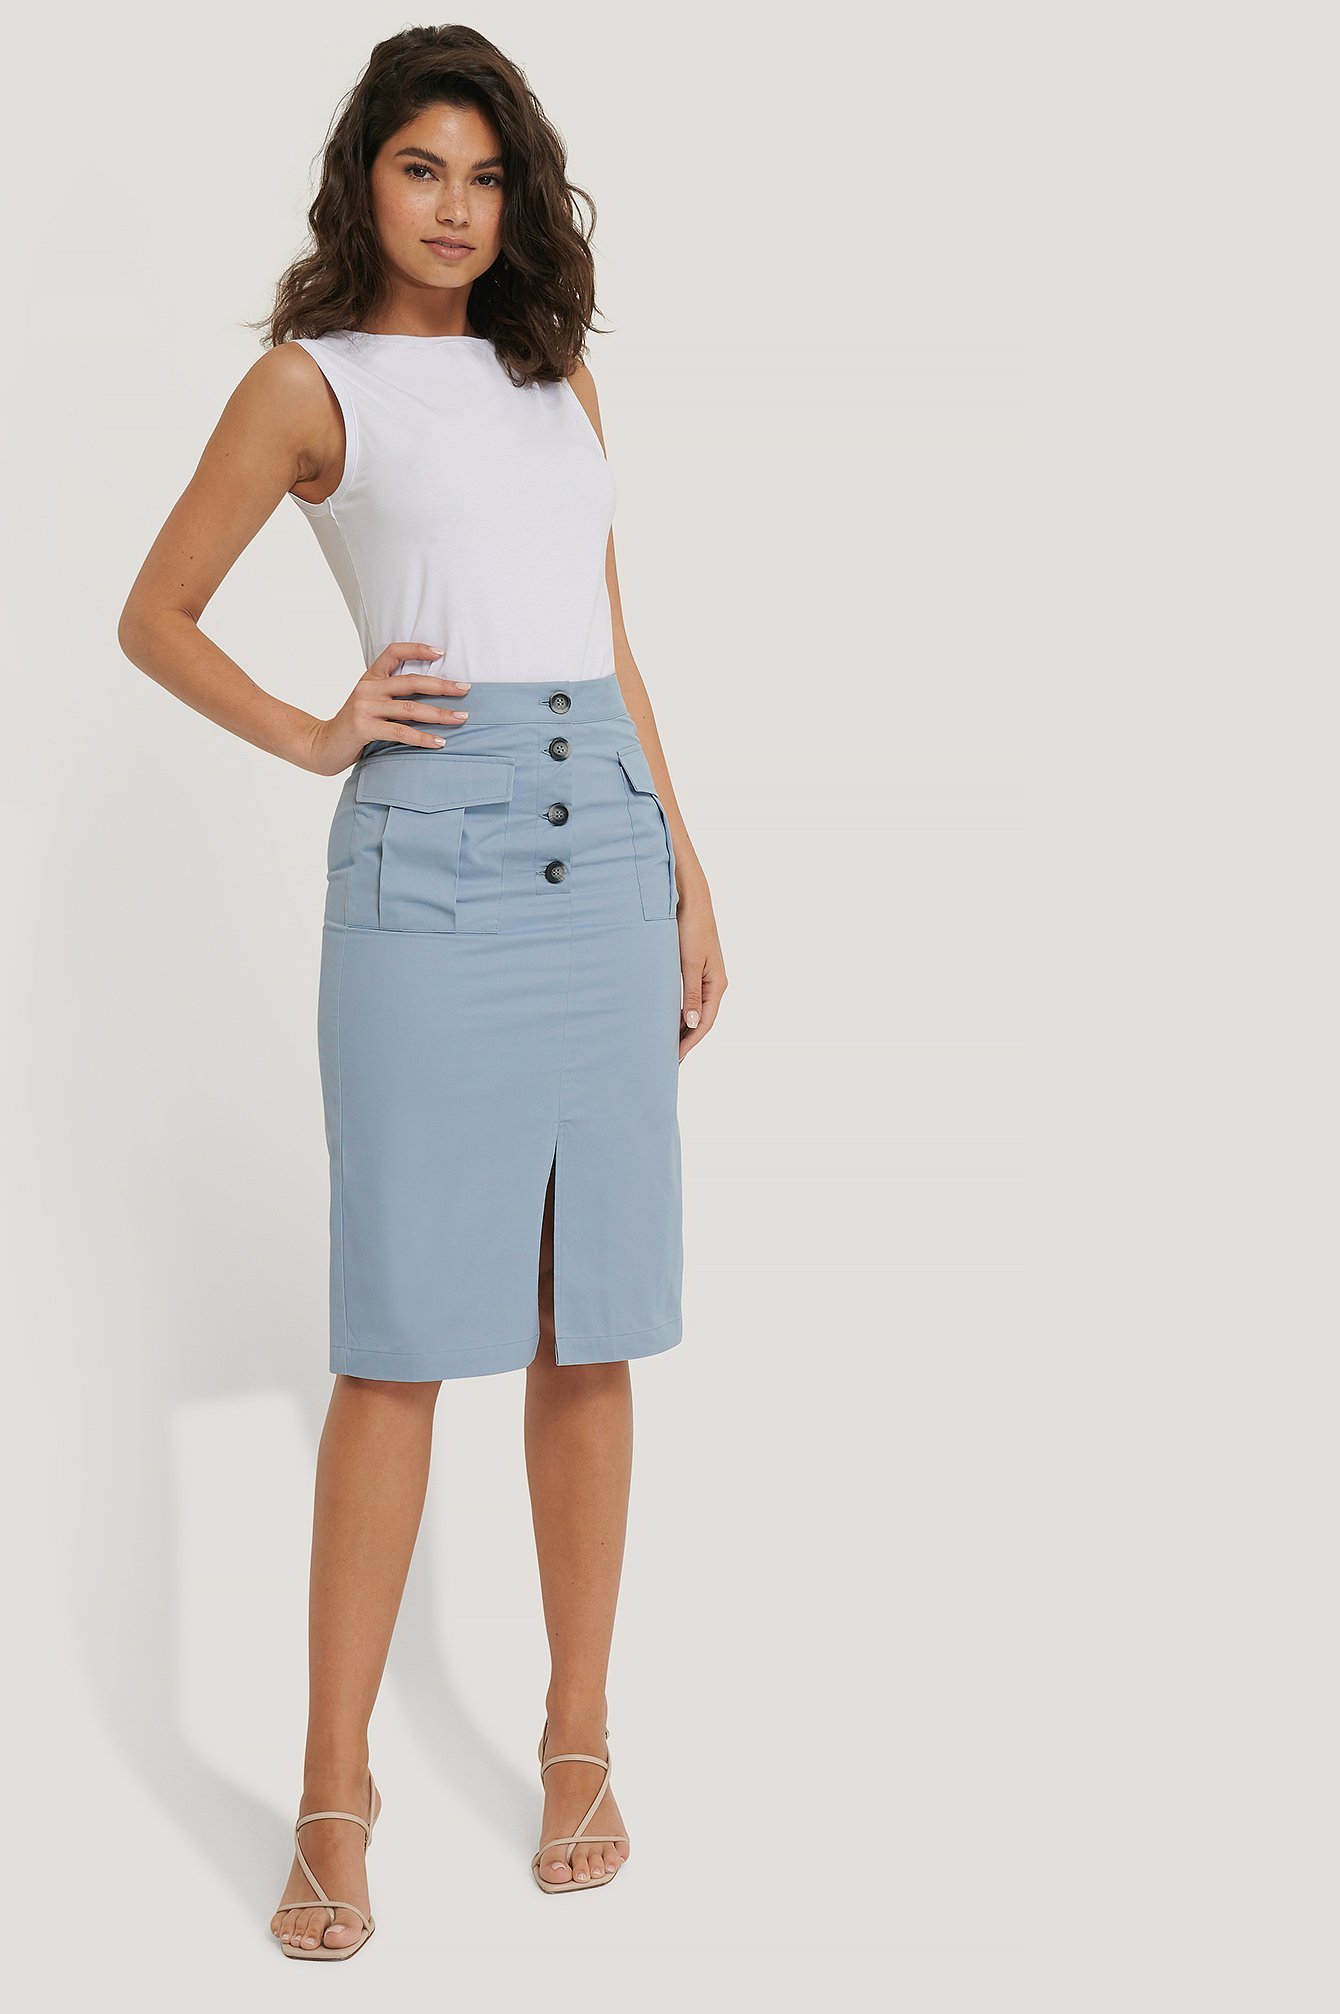 Pocket Midi Skirt Outfit